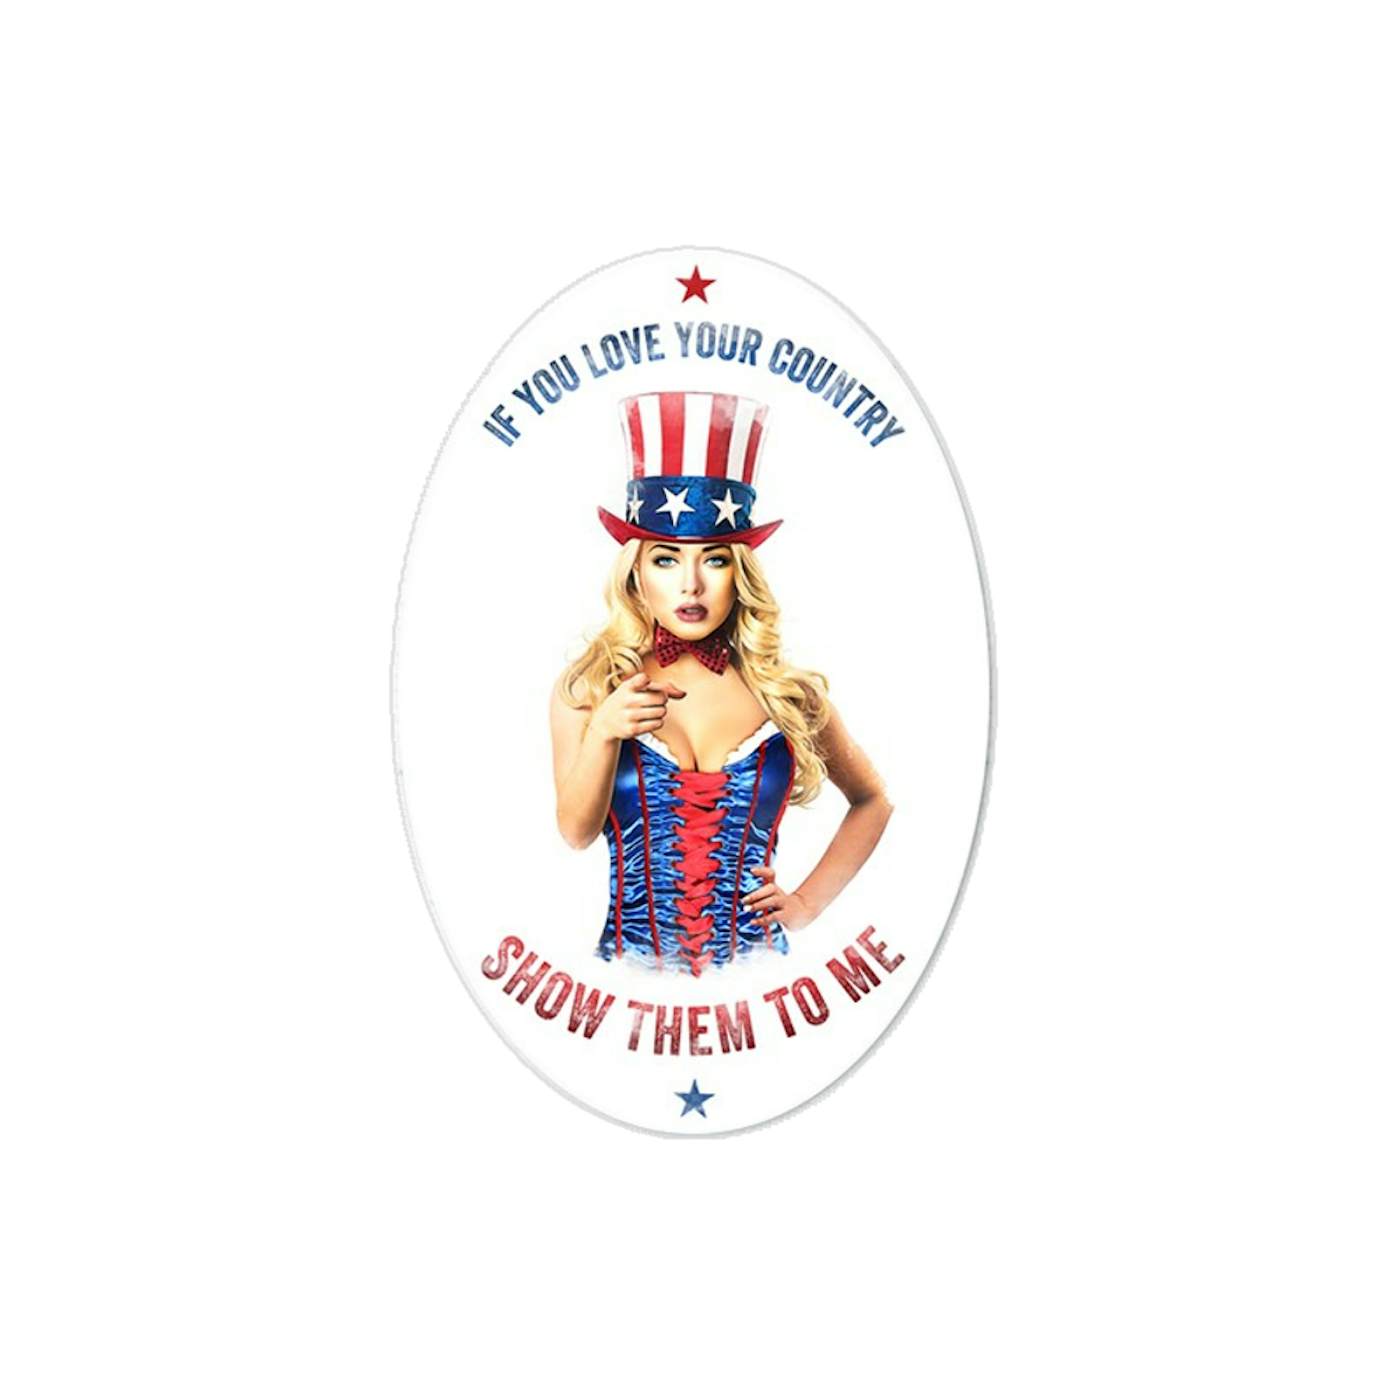 Rodney Carrington White "Sexy Uncle Sam" Sticker